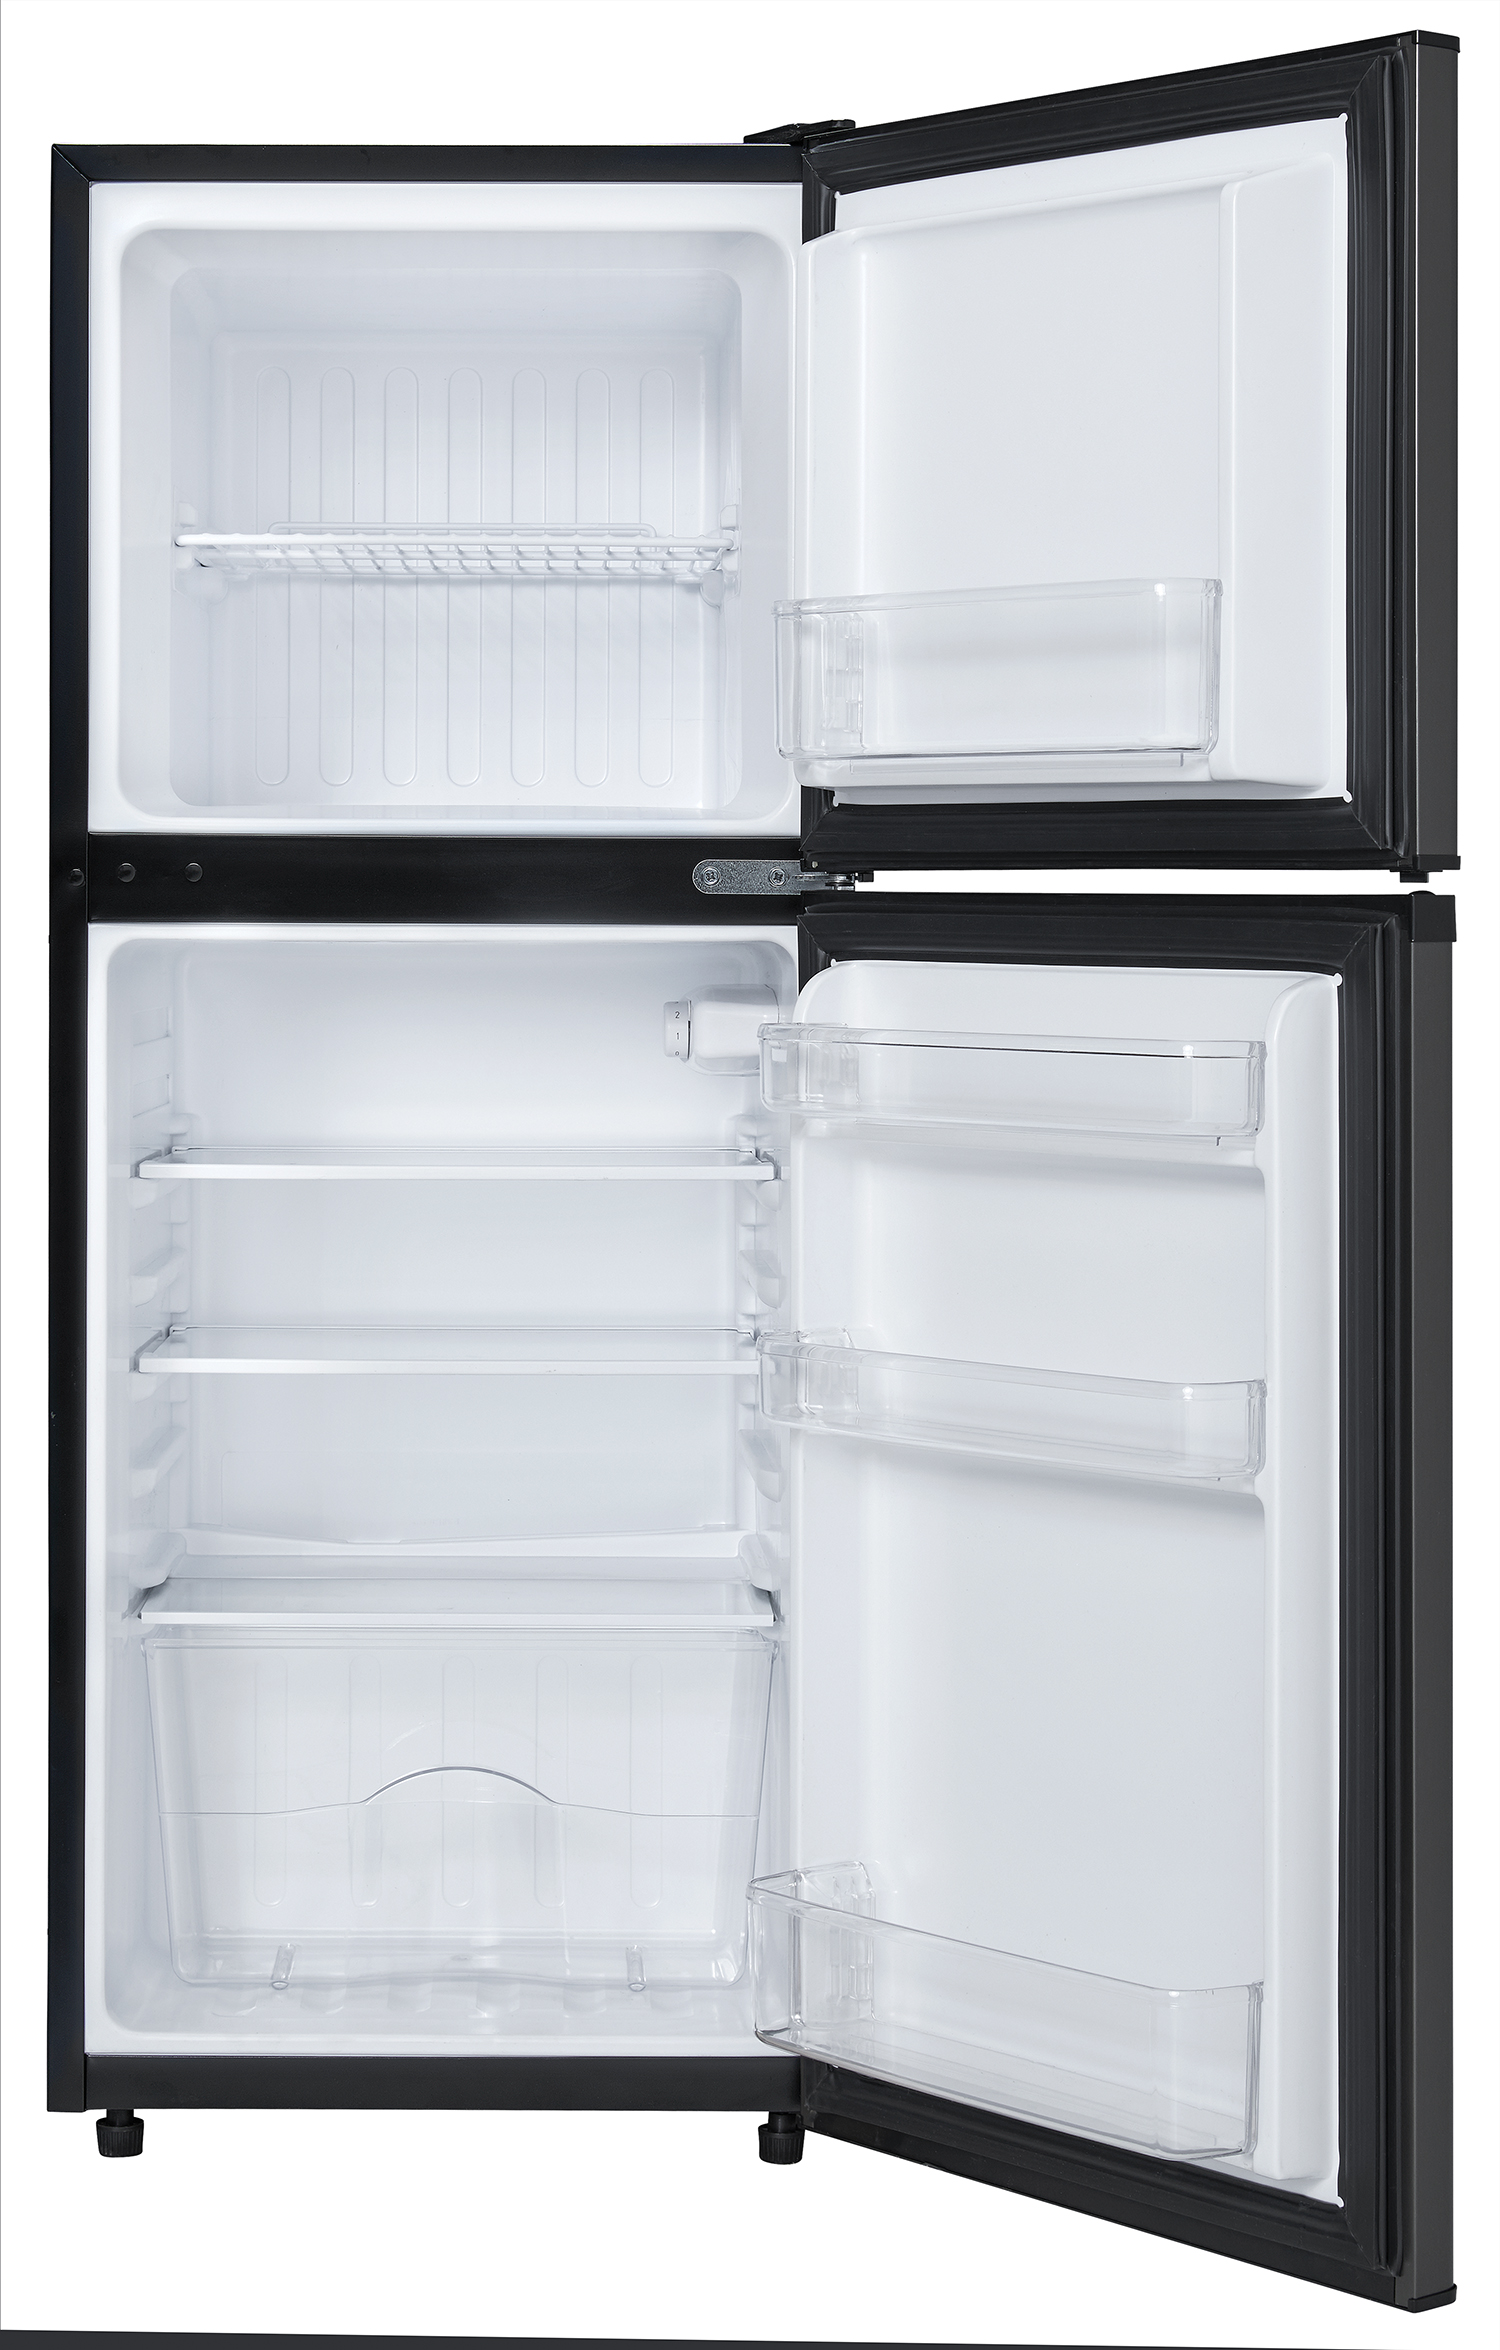 Danby 4.7 cu. ft. Compact Refrigerator